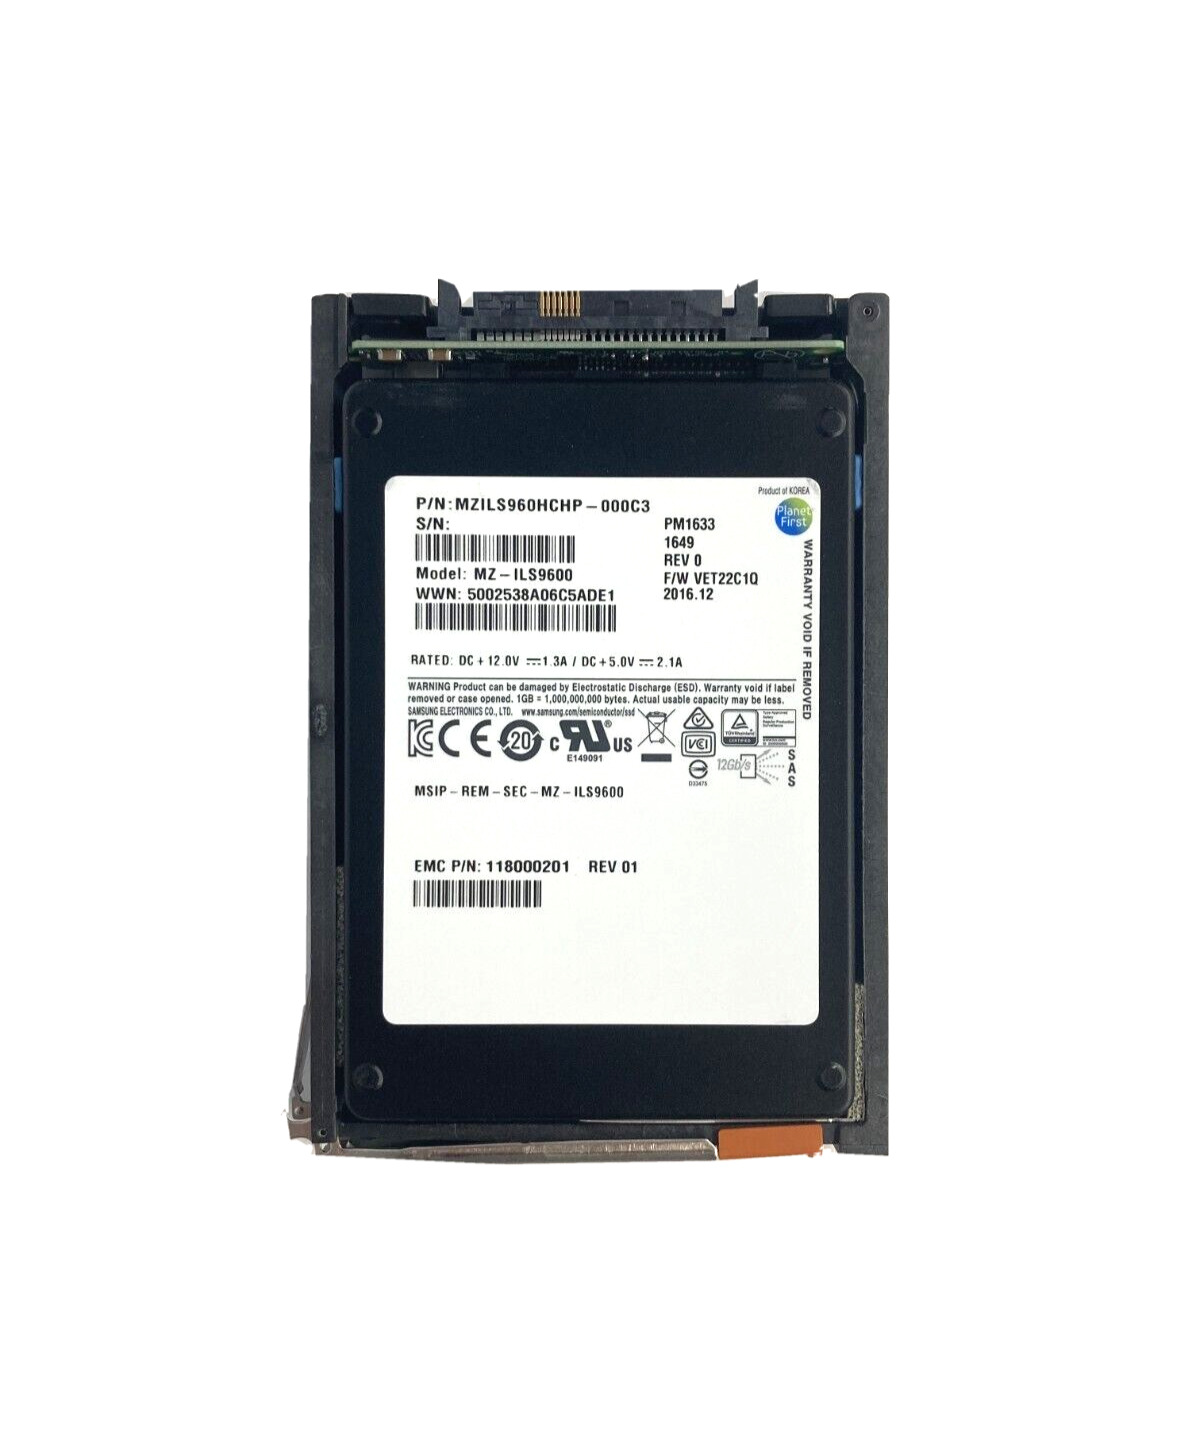 SAMSUNG MZ-ILS9600 SSD 960GB SAS 12Gb/s 2.5\